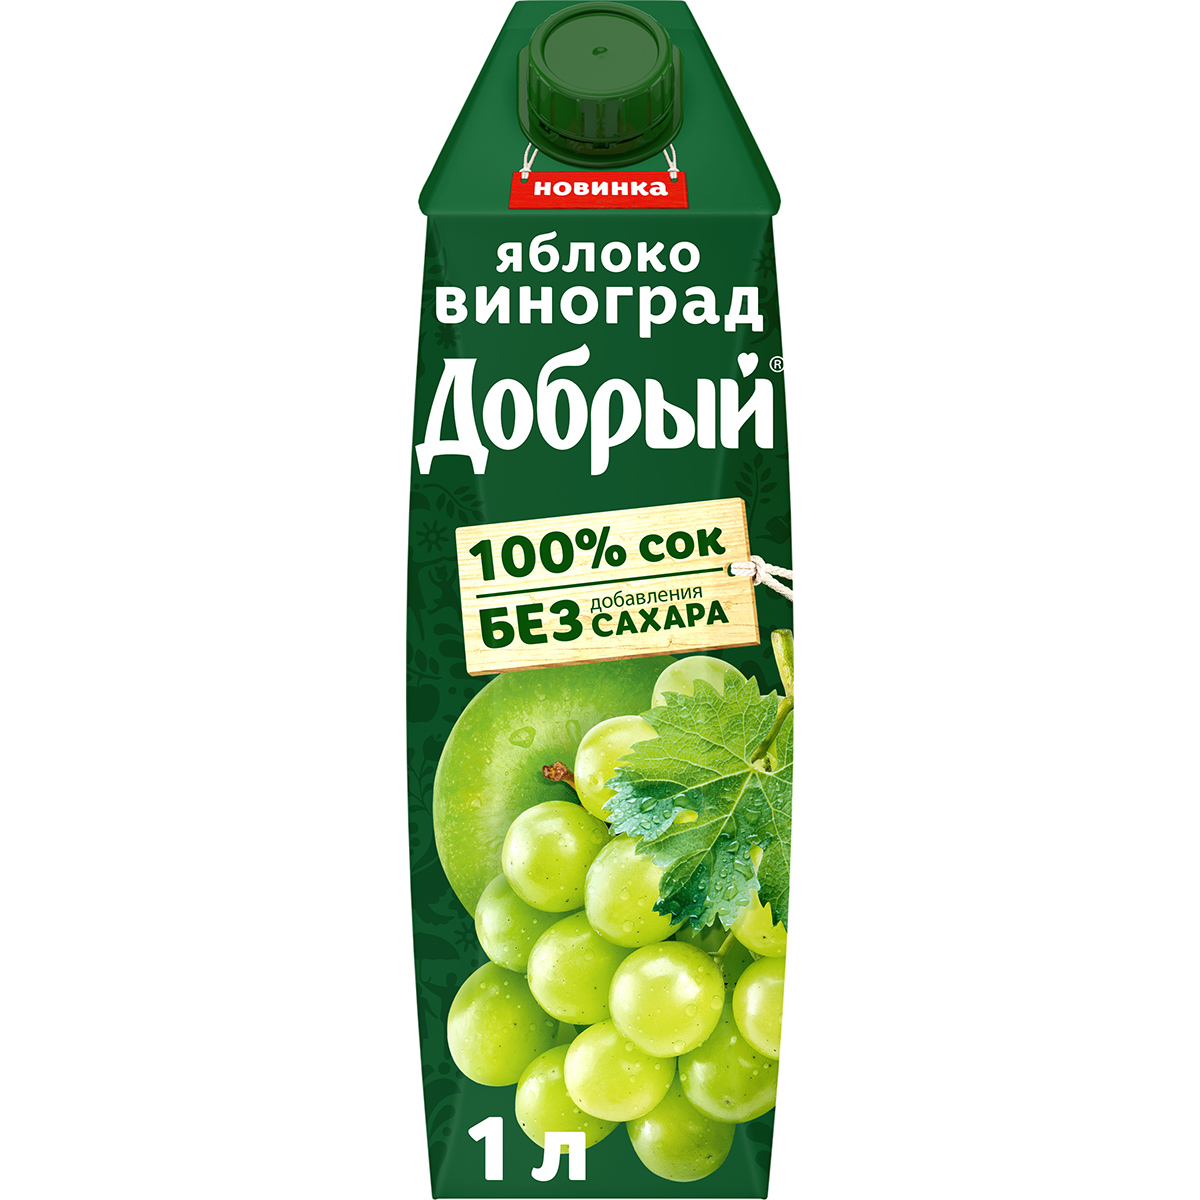 Сок Добрый Яблоко-виноград 1 л сок добрый яблоко 0 3 л